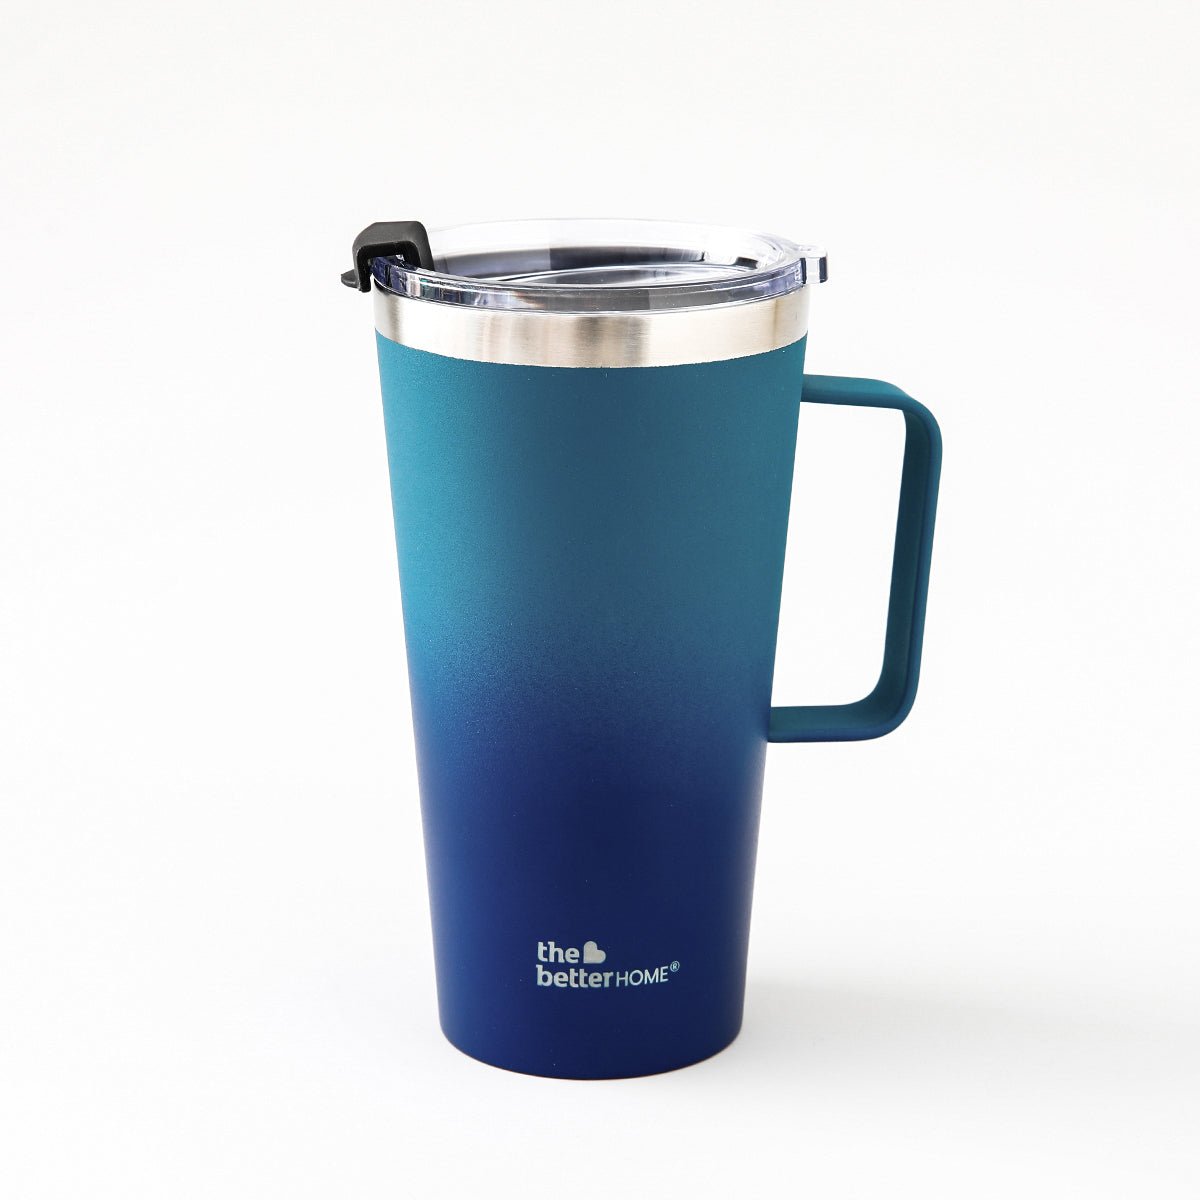 Rage Coffee - Insulated Double Wall Stainless Steel Coffee Mug - Aqua Blue 450ml product image